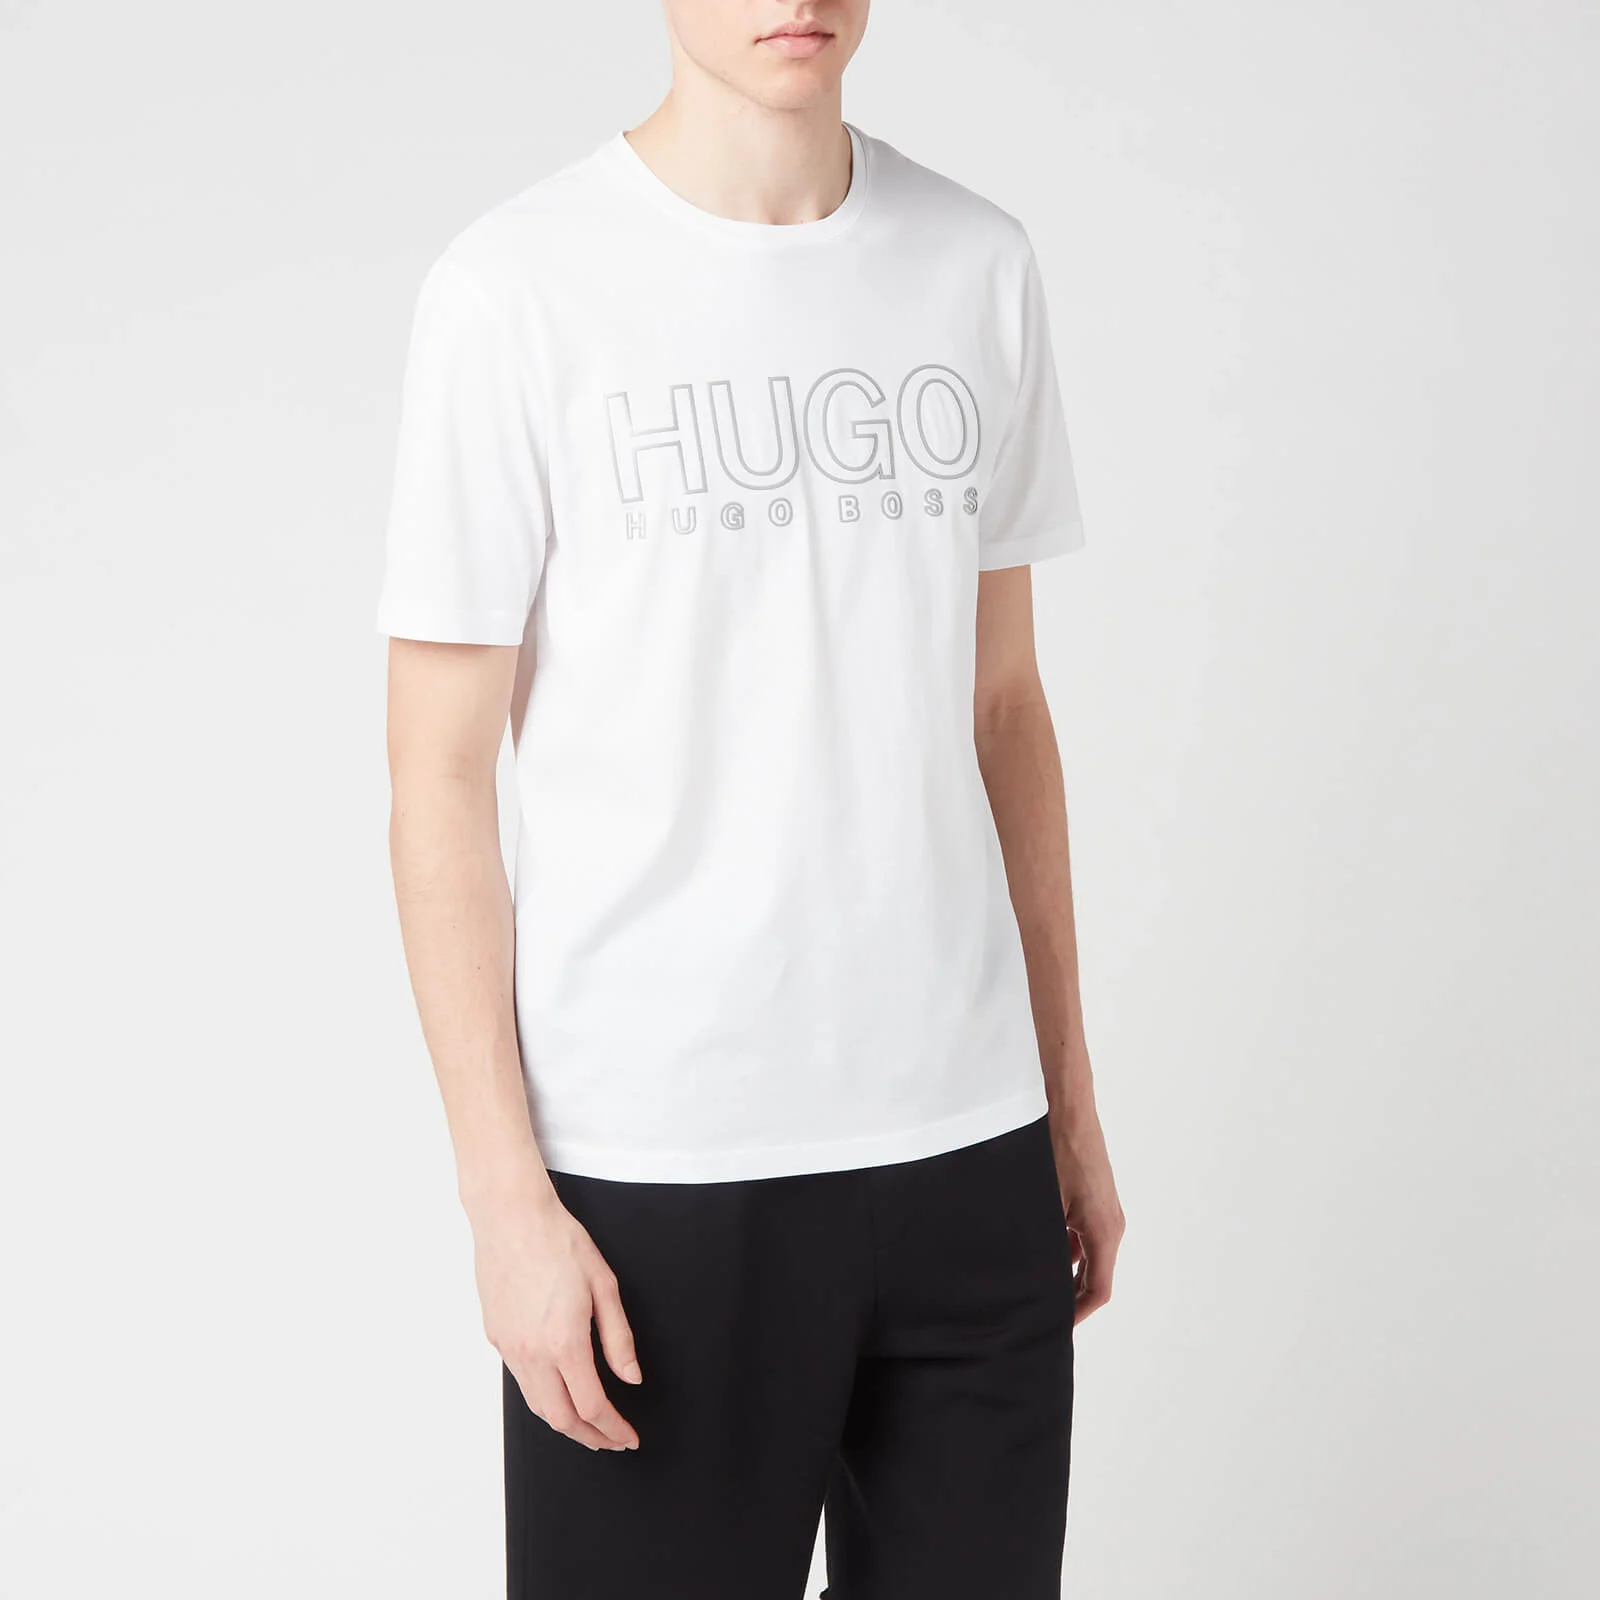 HUGO Men's Dolive-U202 T-Shirt - White Image 1